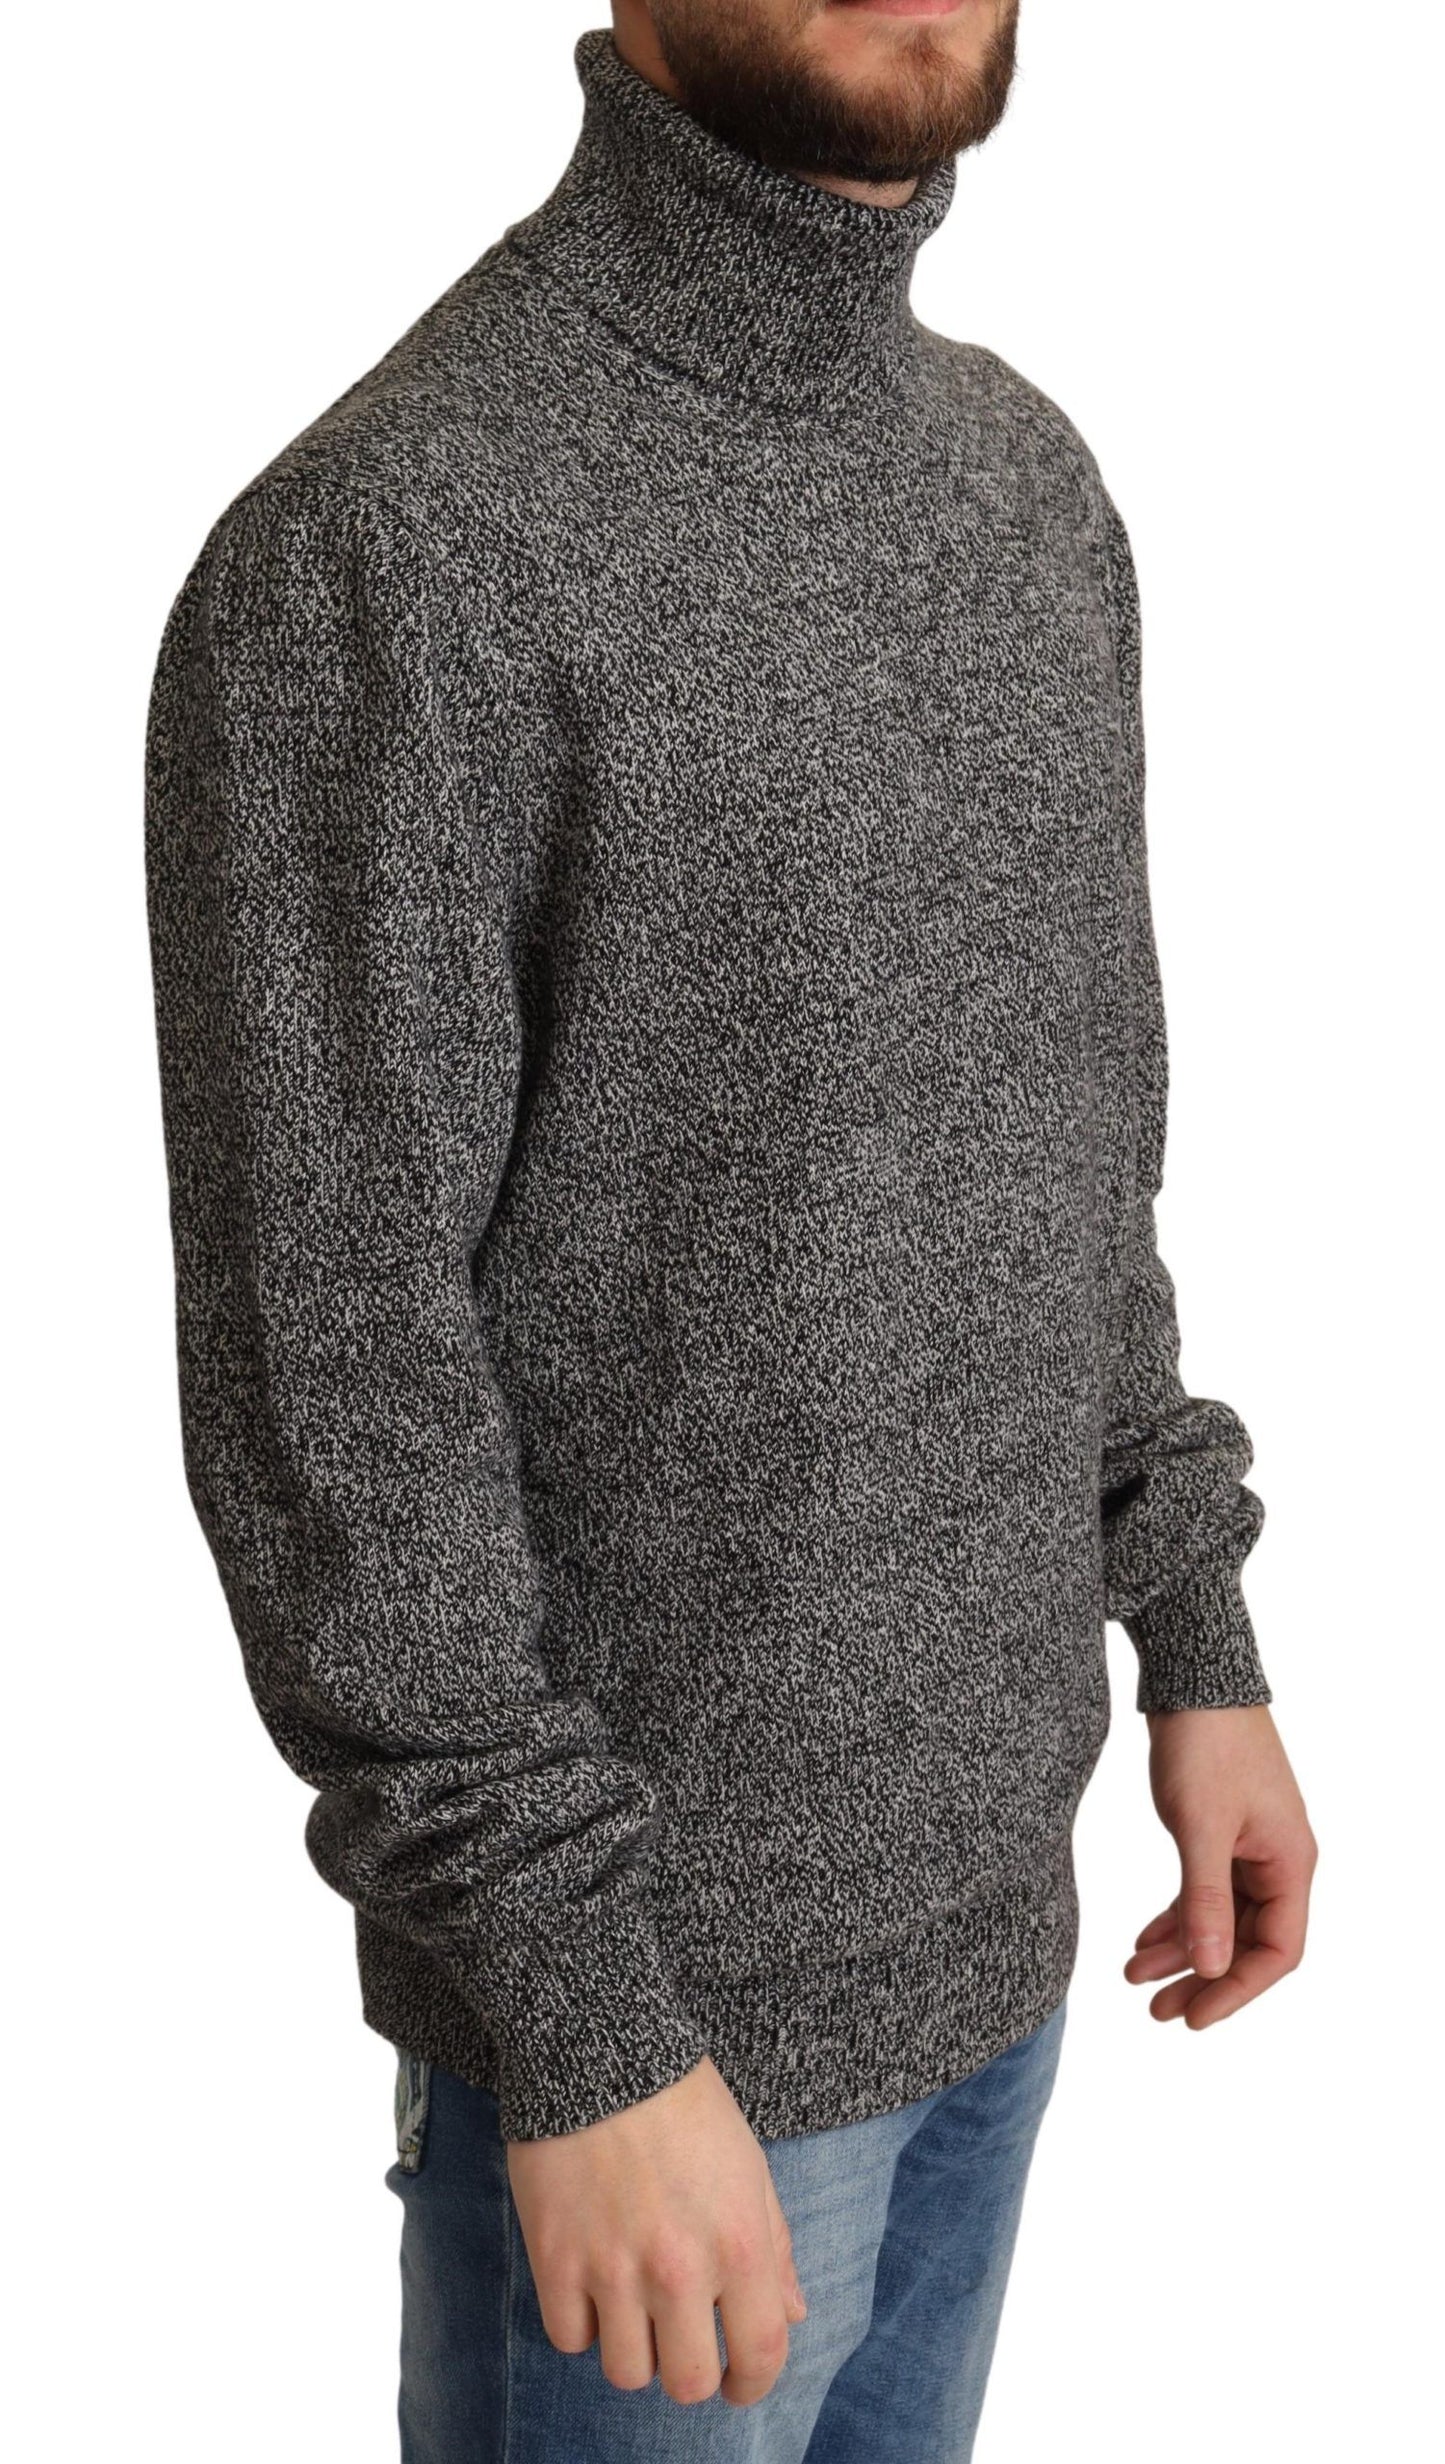 Dolce & Gabbana Gray Turtle Neck Cashmere Pullover Sweater